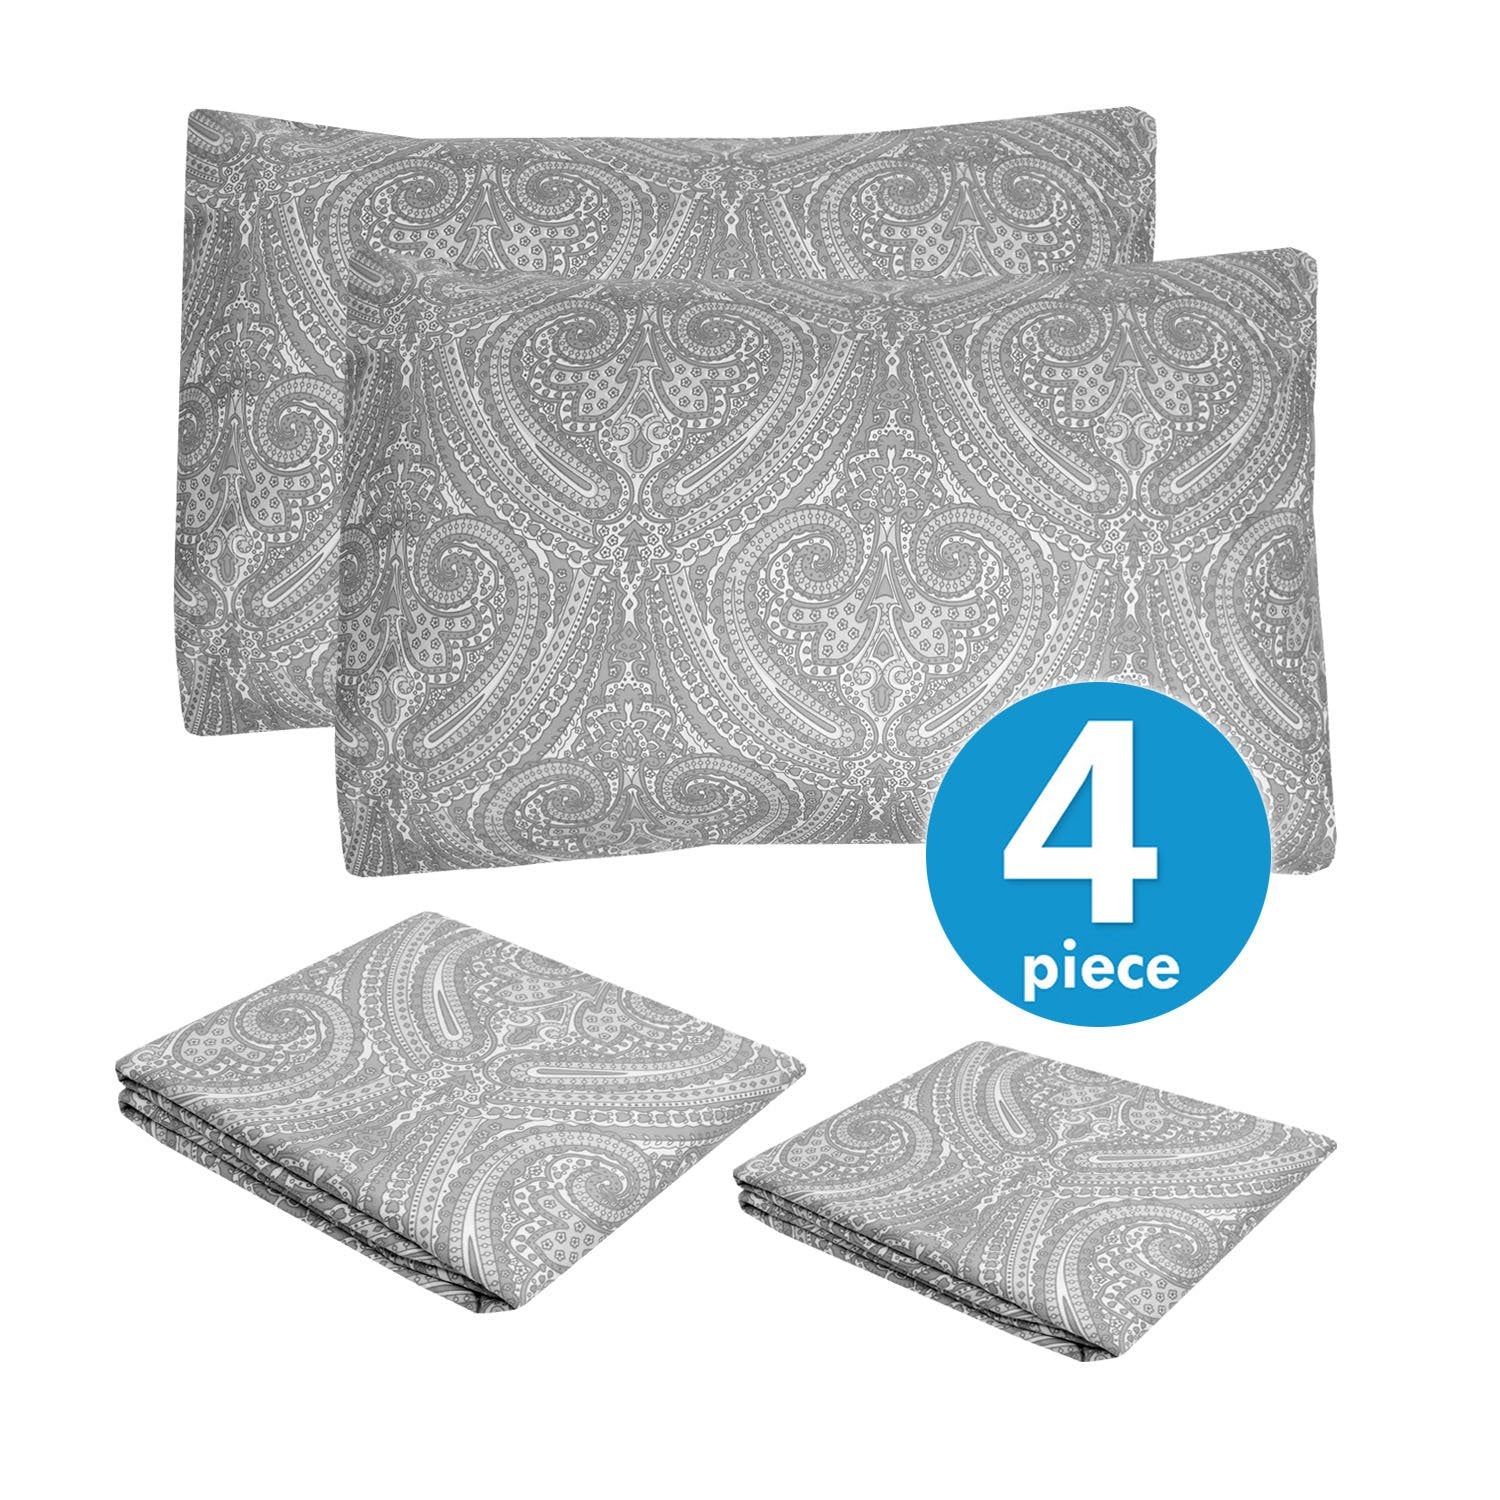 Classic 4-Piece Bed Sheet Set (Loft Gray Paisley) - Set